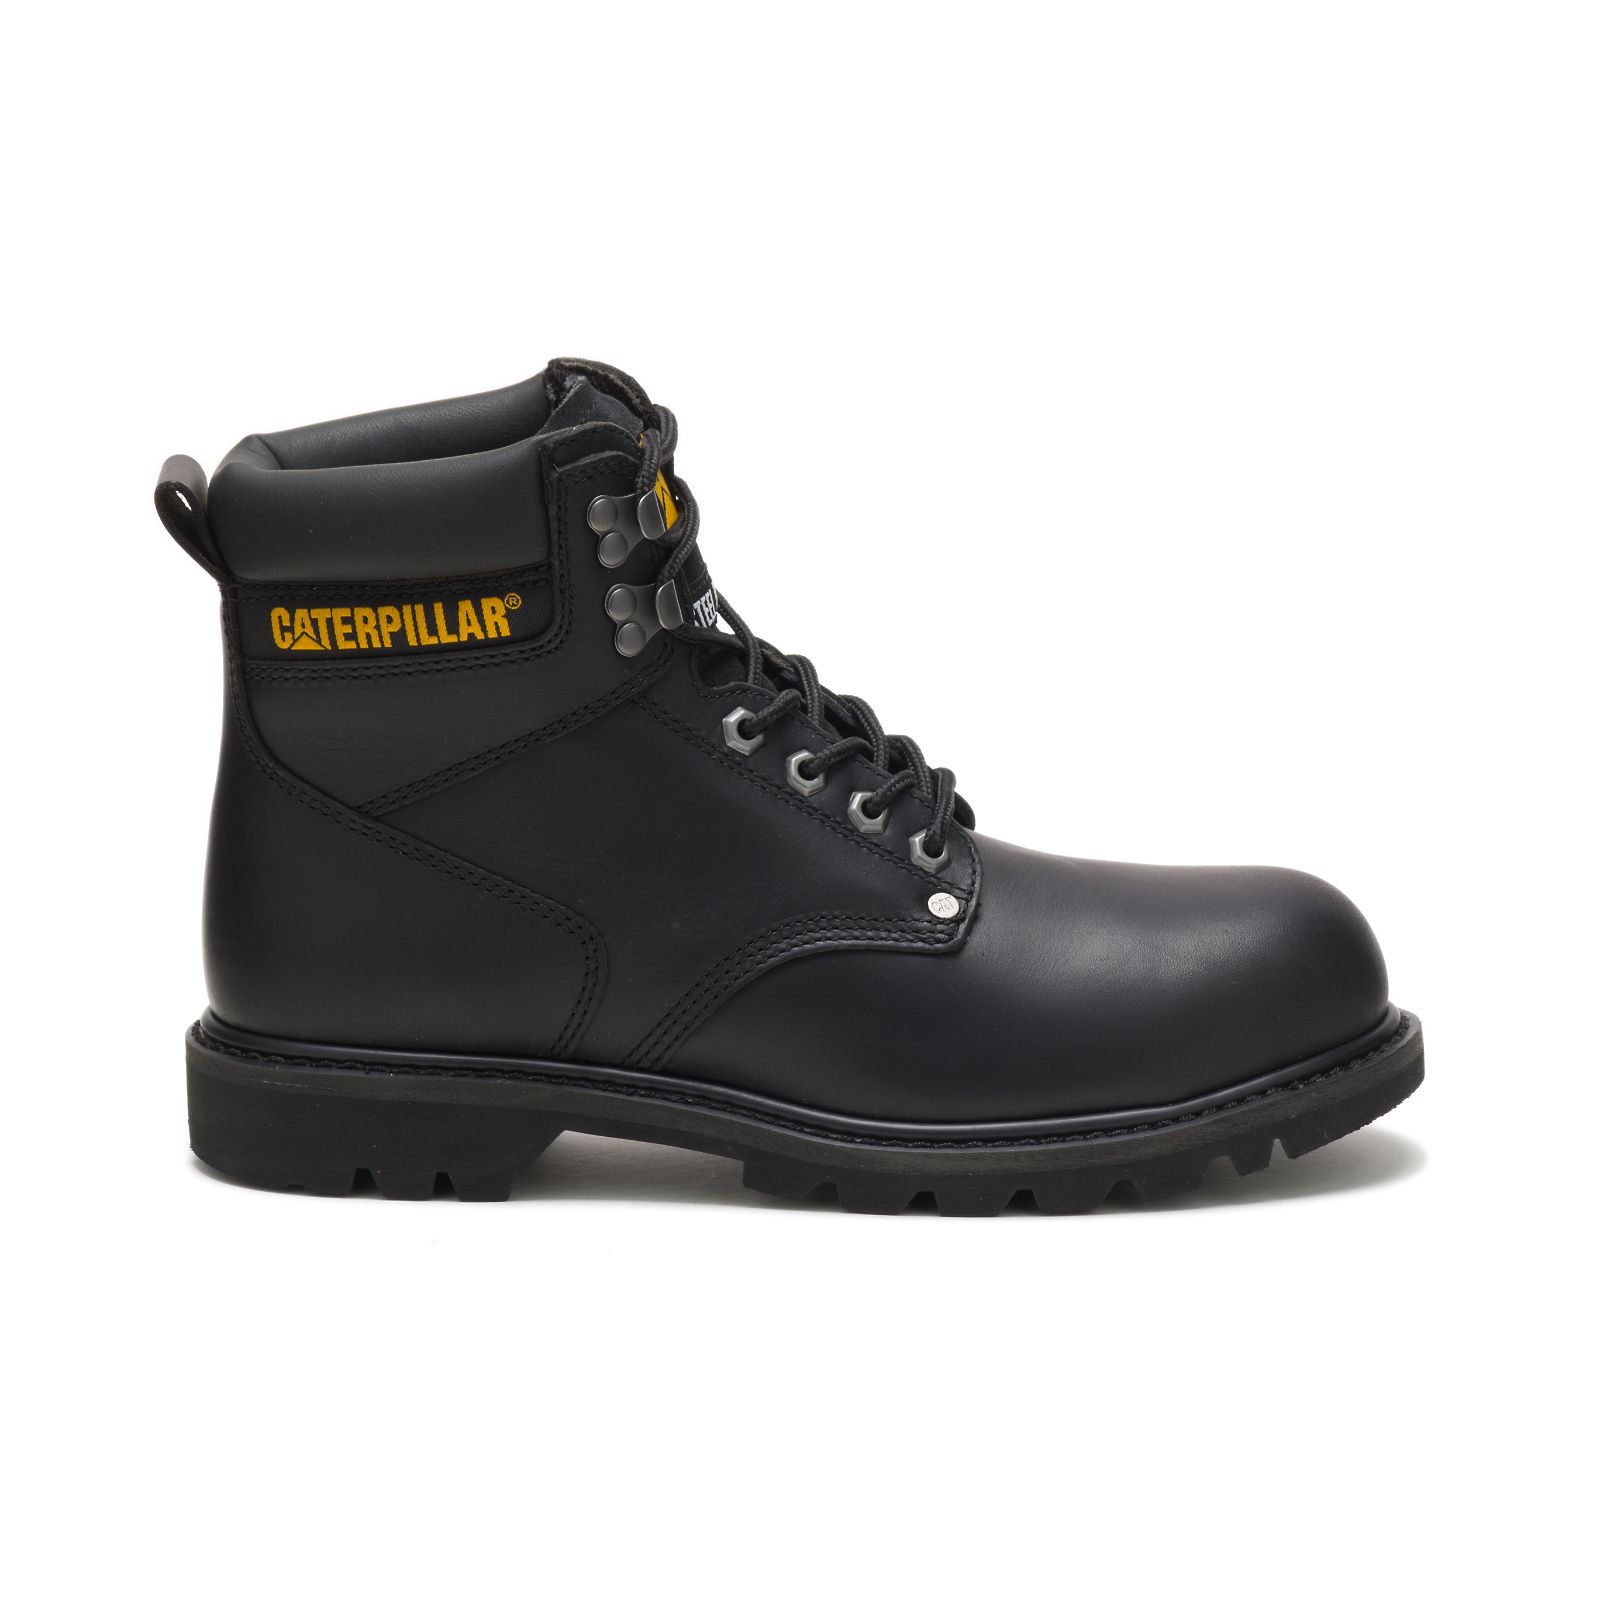 Men's Caterpillar Second Shift Steel Toe Work Boots Black Ireland VSOL74813